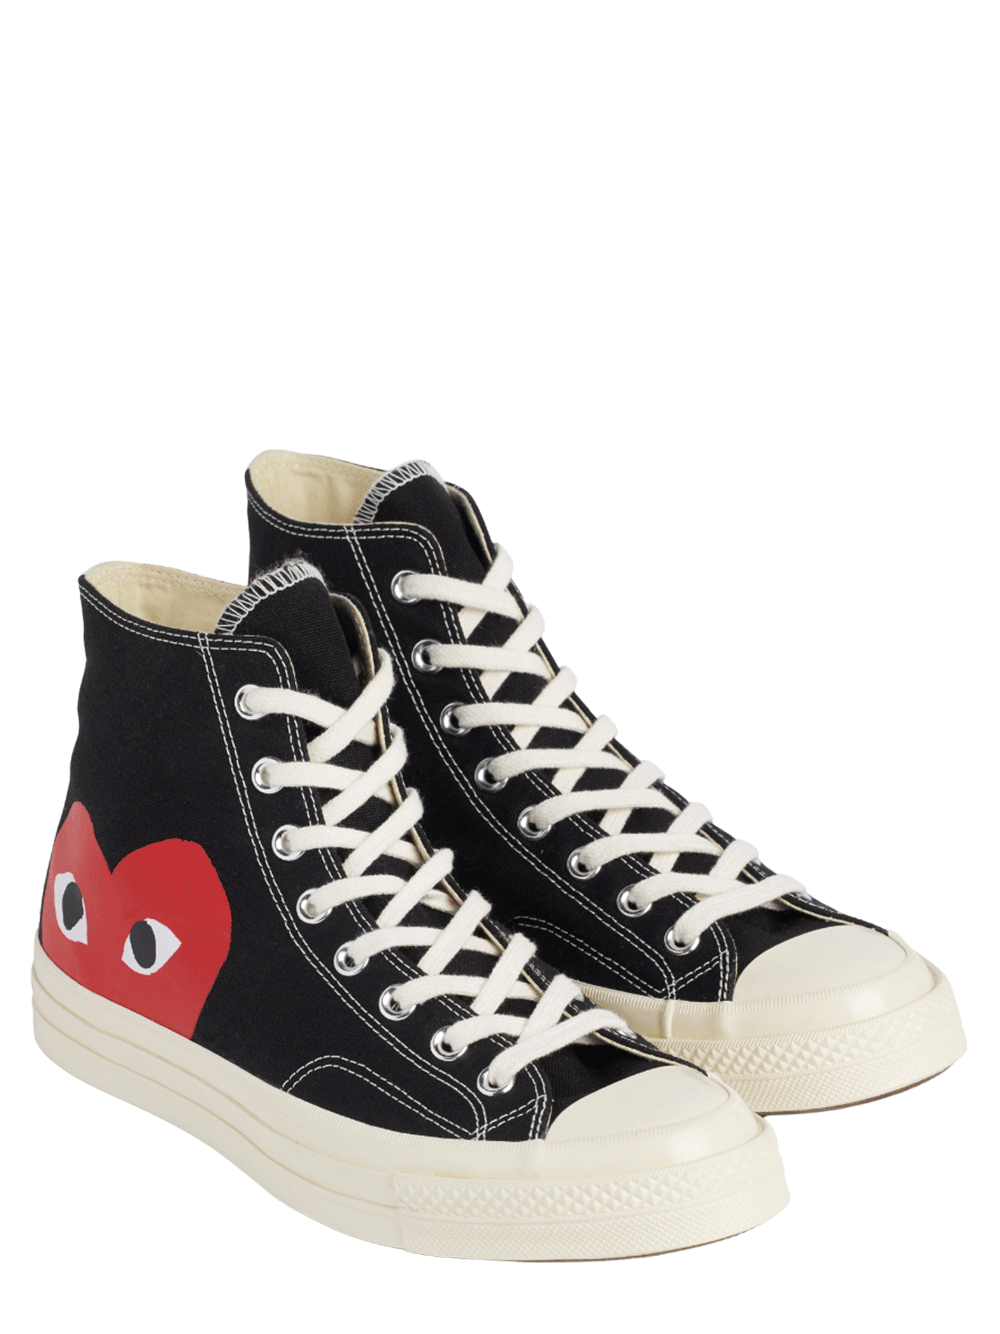 COMME-des-GARCONS-PLAY-CONVERSE-Converse-Peek-A-Boo-Heart-High-Cut-Sneakers-Black-2